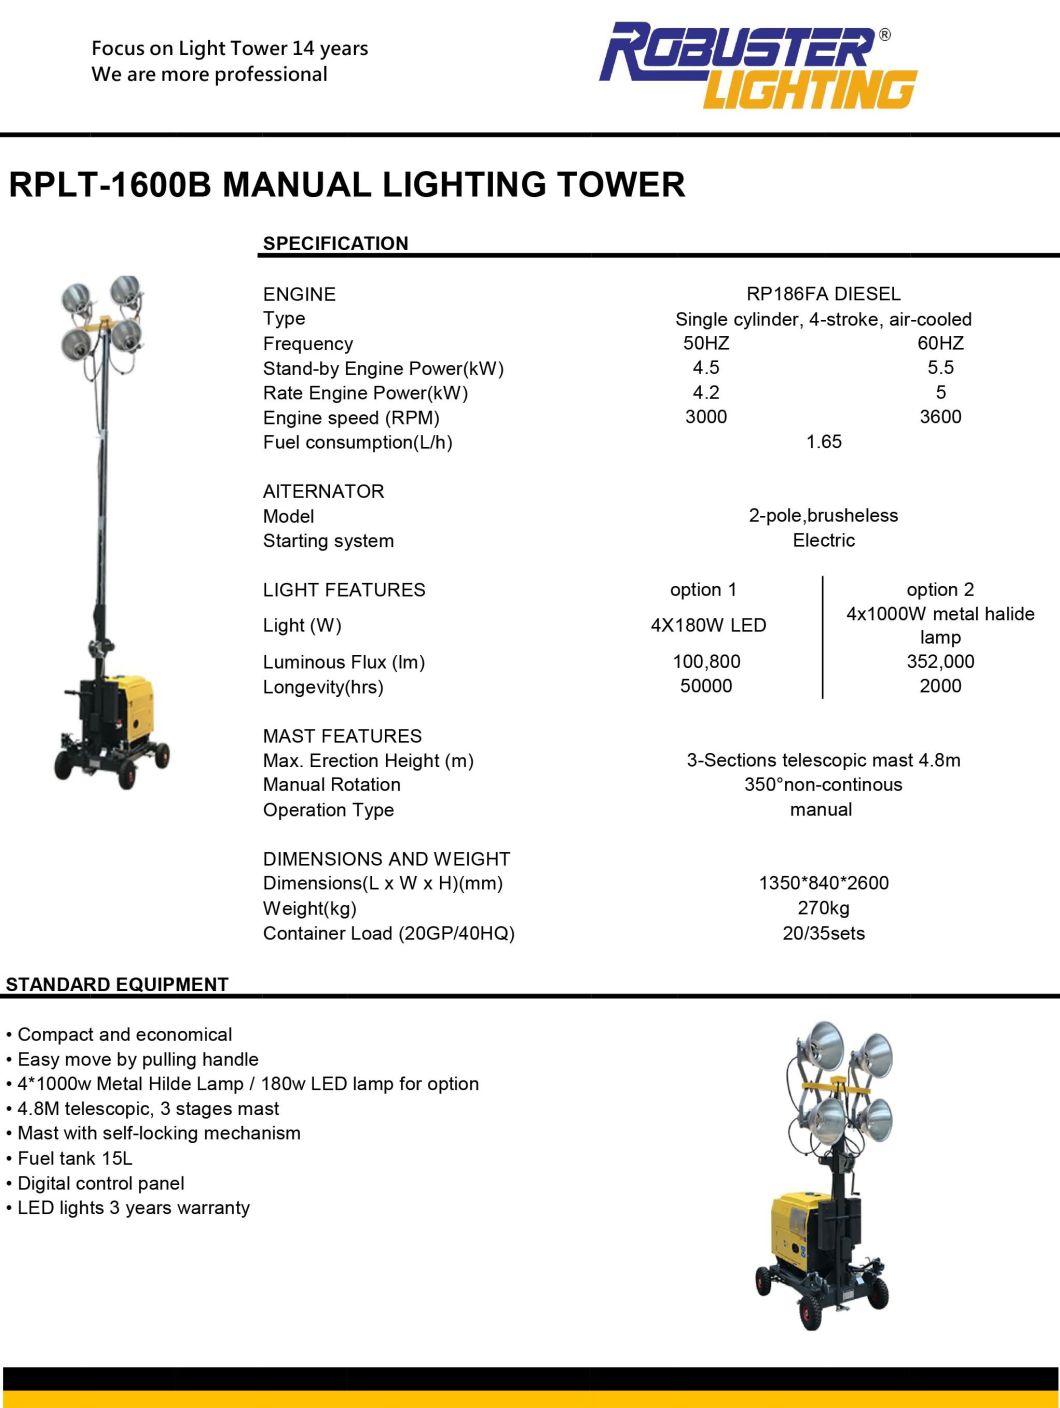 Hot Selling 4*1000W Metal Halide Compact Mobile Lighting Tower